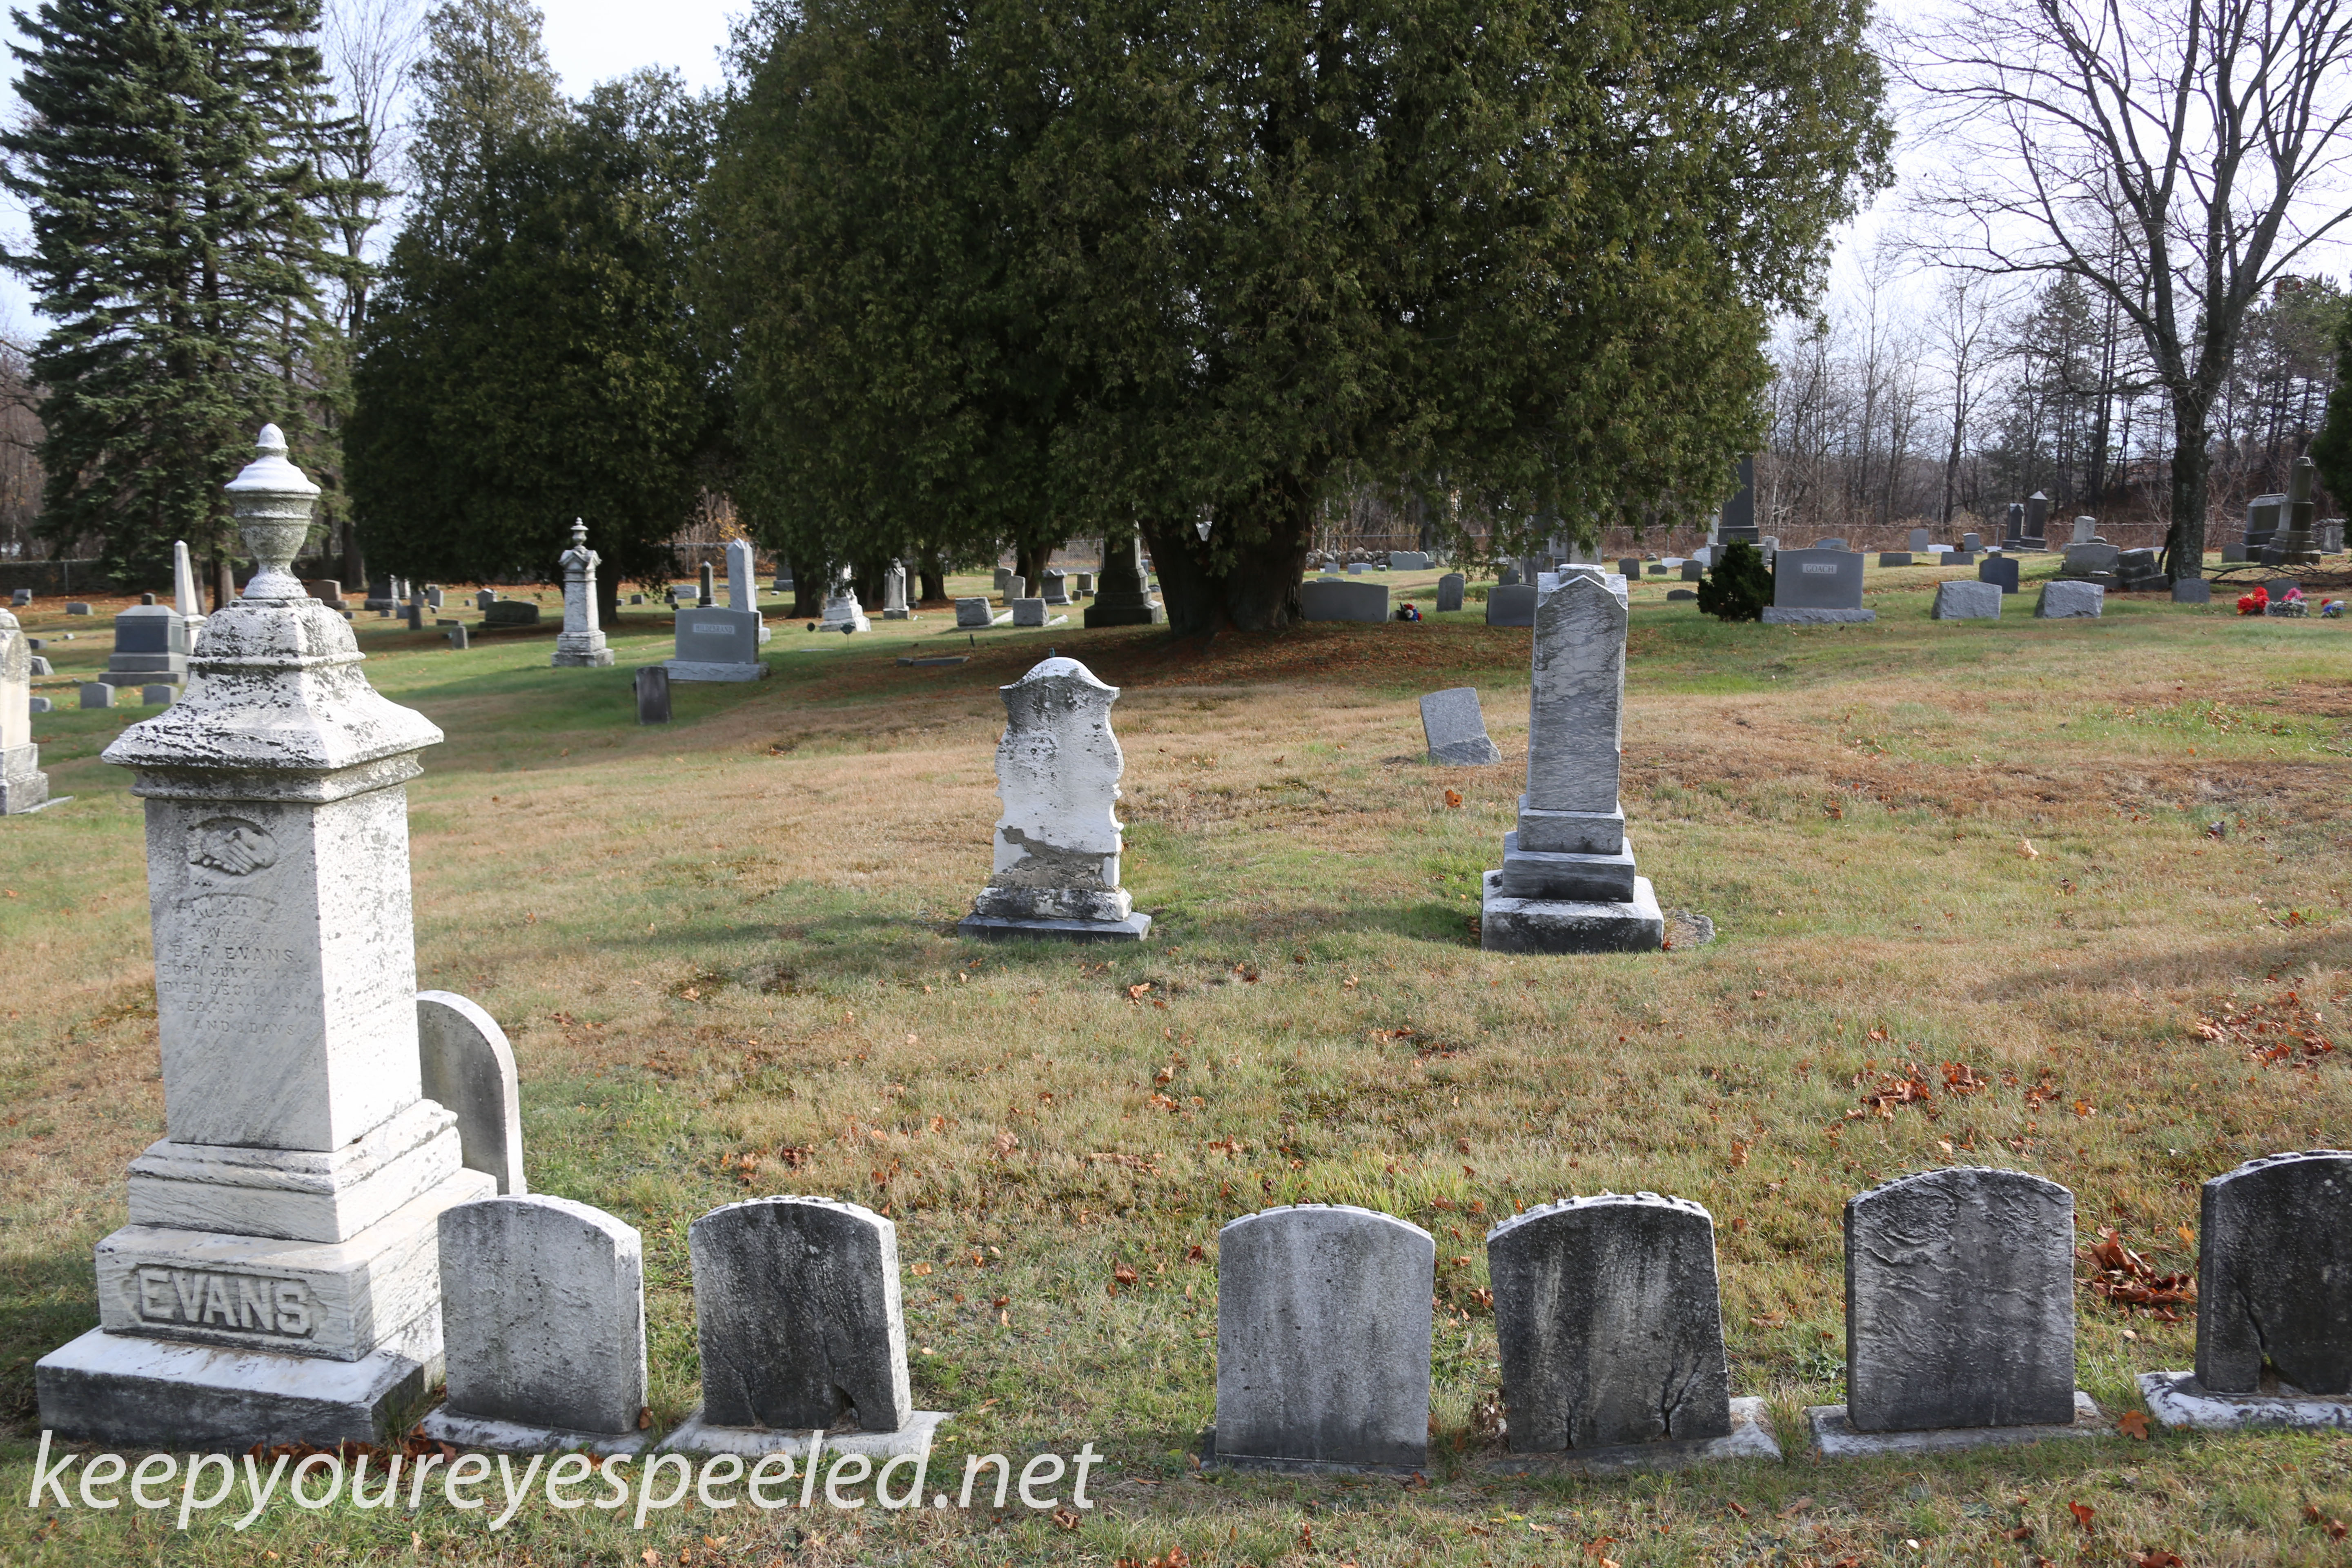 McAdoo-Tresckow hike  jeanesvill cemetery  (8 of 16)